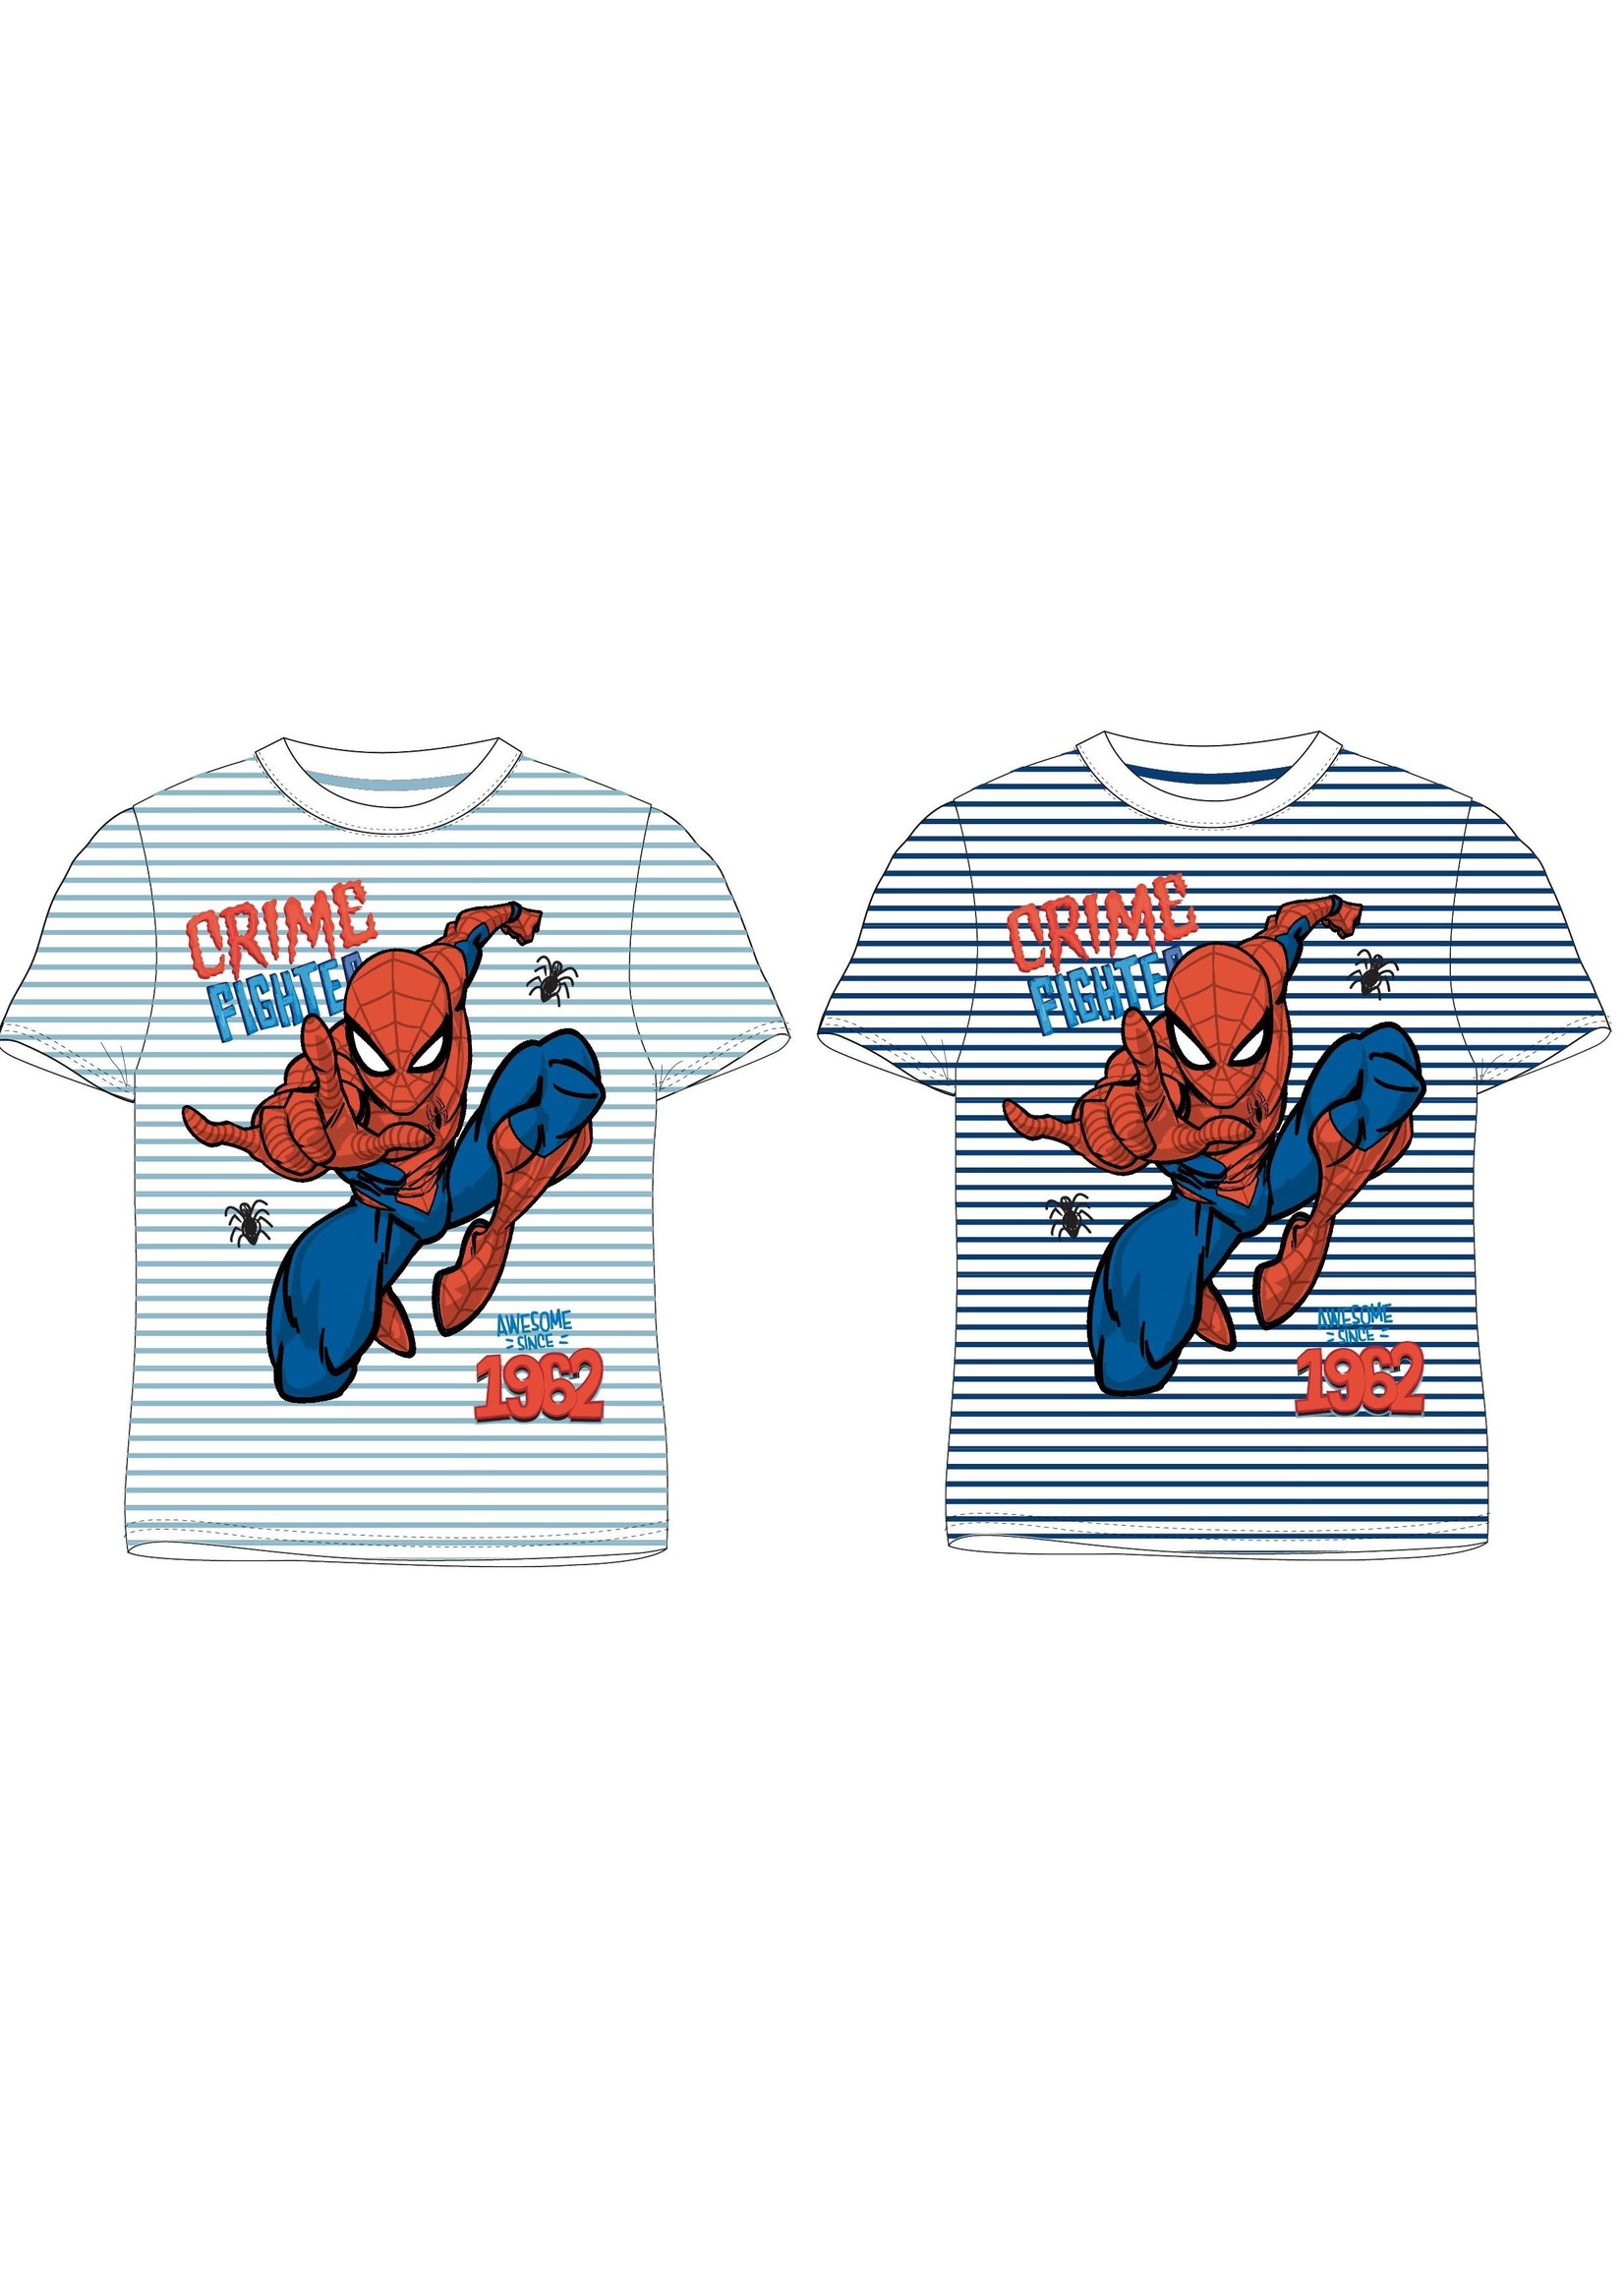 Marvel Spiderman T-shirt from Marvel navy blue-white striped